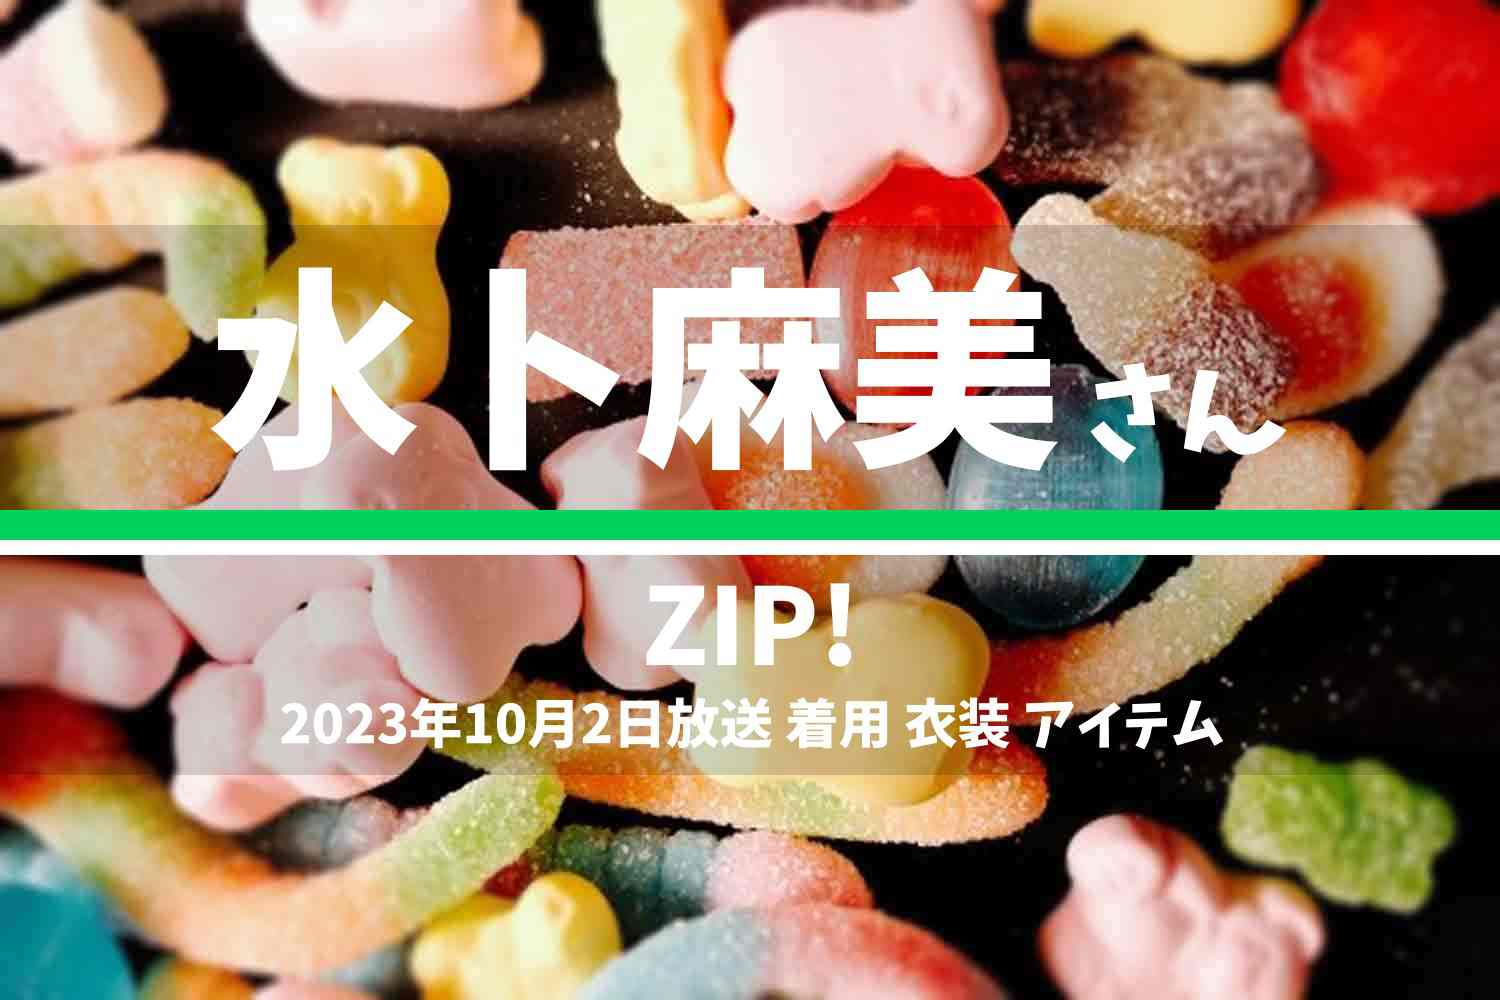 ZIP! 水卜麻美さん 番組 衣装 2023年10月2日放送